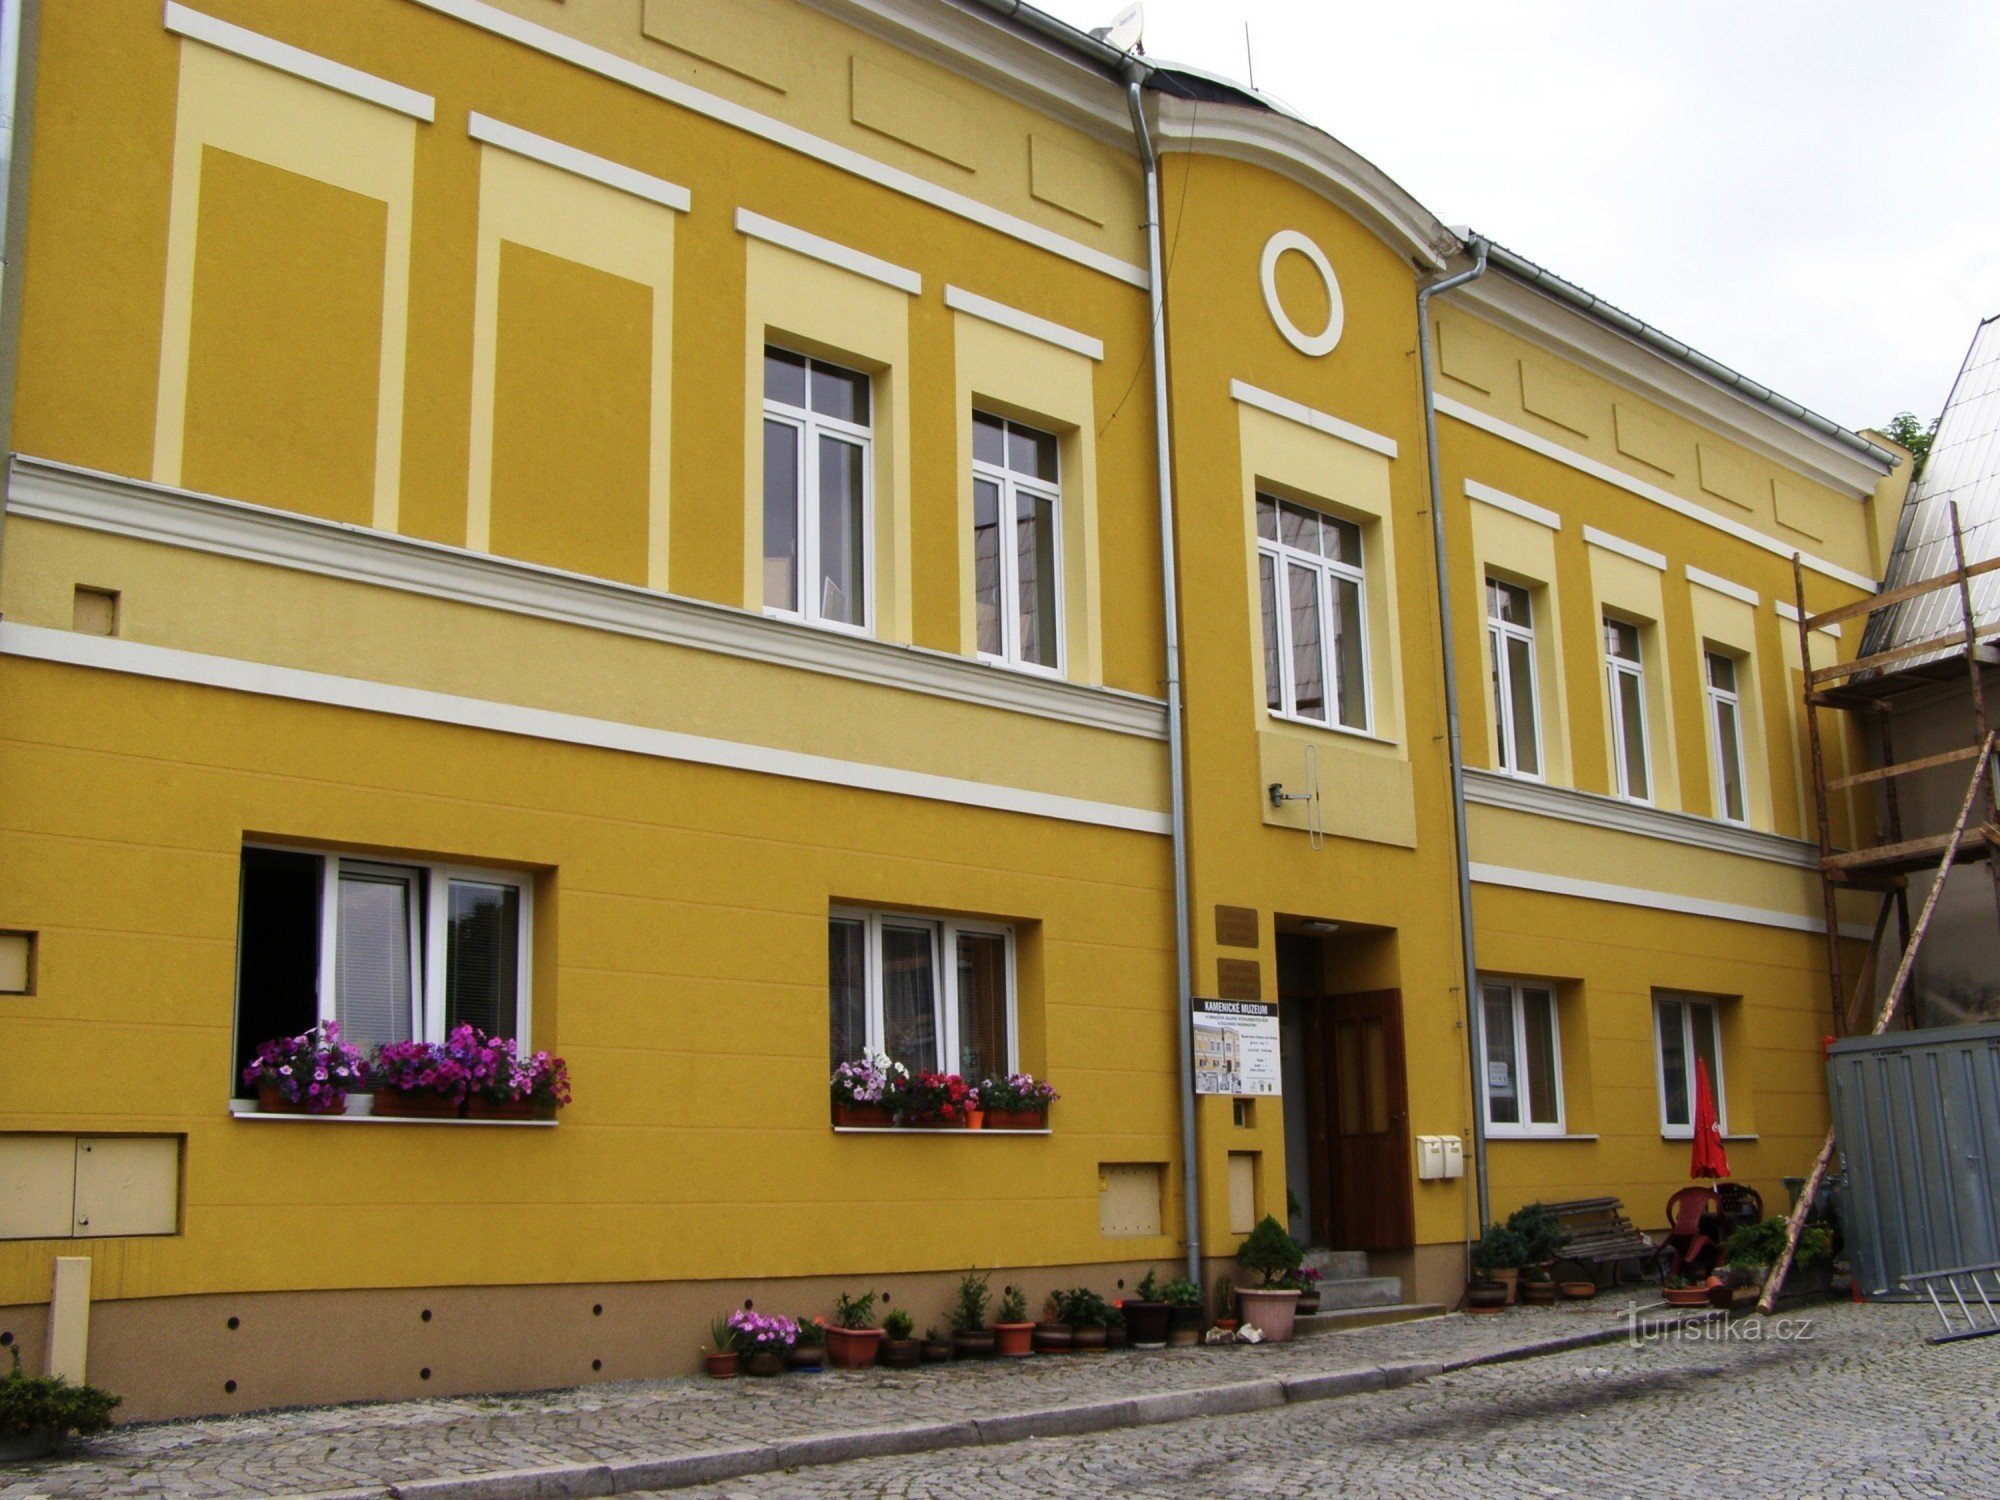 Žulová - Μουσείο Kamenické, Κέντρο τουριστικών πληροφοριών, βιβλιοθήκη